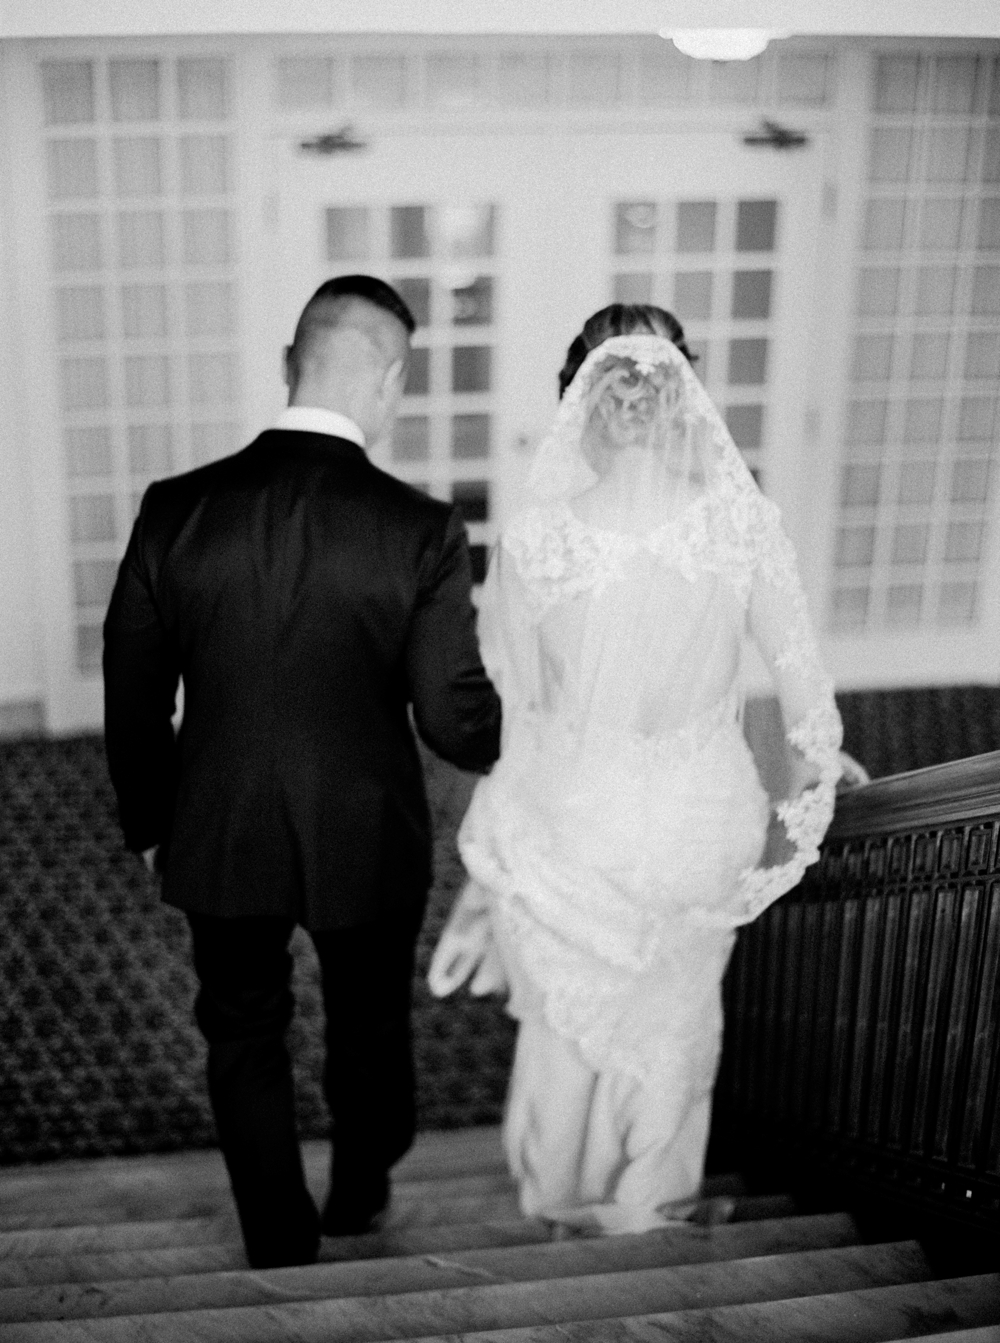 Calgary Wedding Photographer | Fairmont Hotel Macdonald Wedding | J'adore Weddings & Events Design | Edmonton Photography | Fine Art Film Wedding Photographer